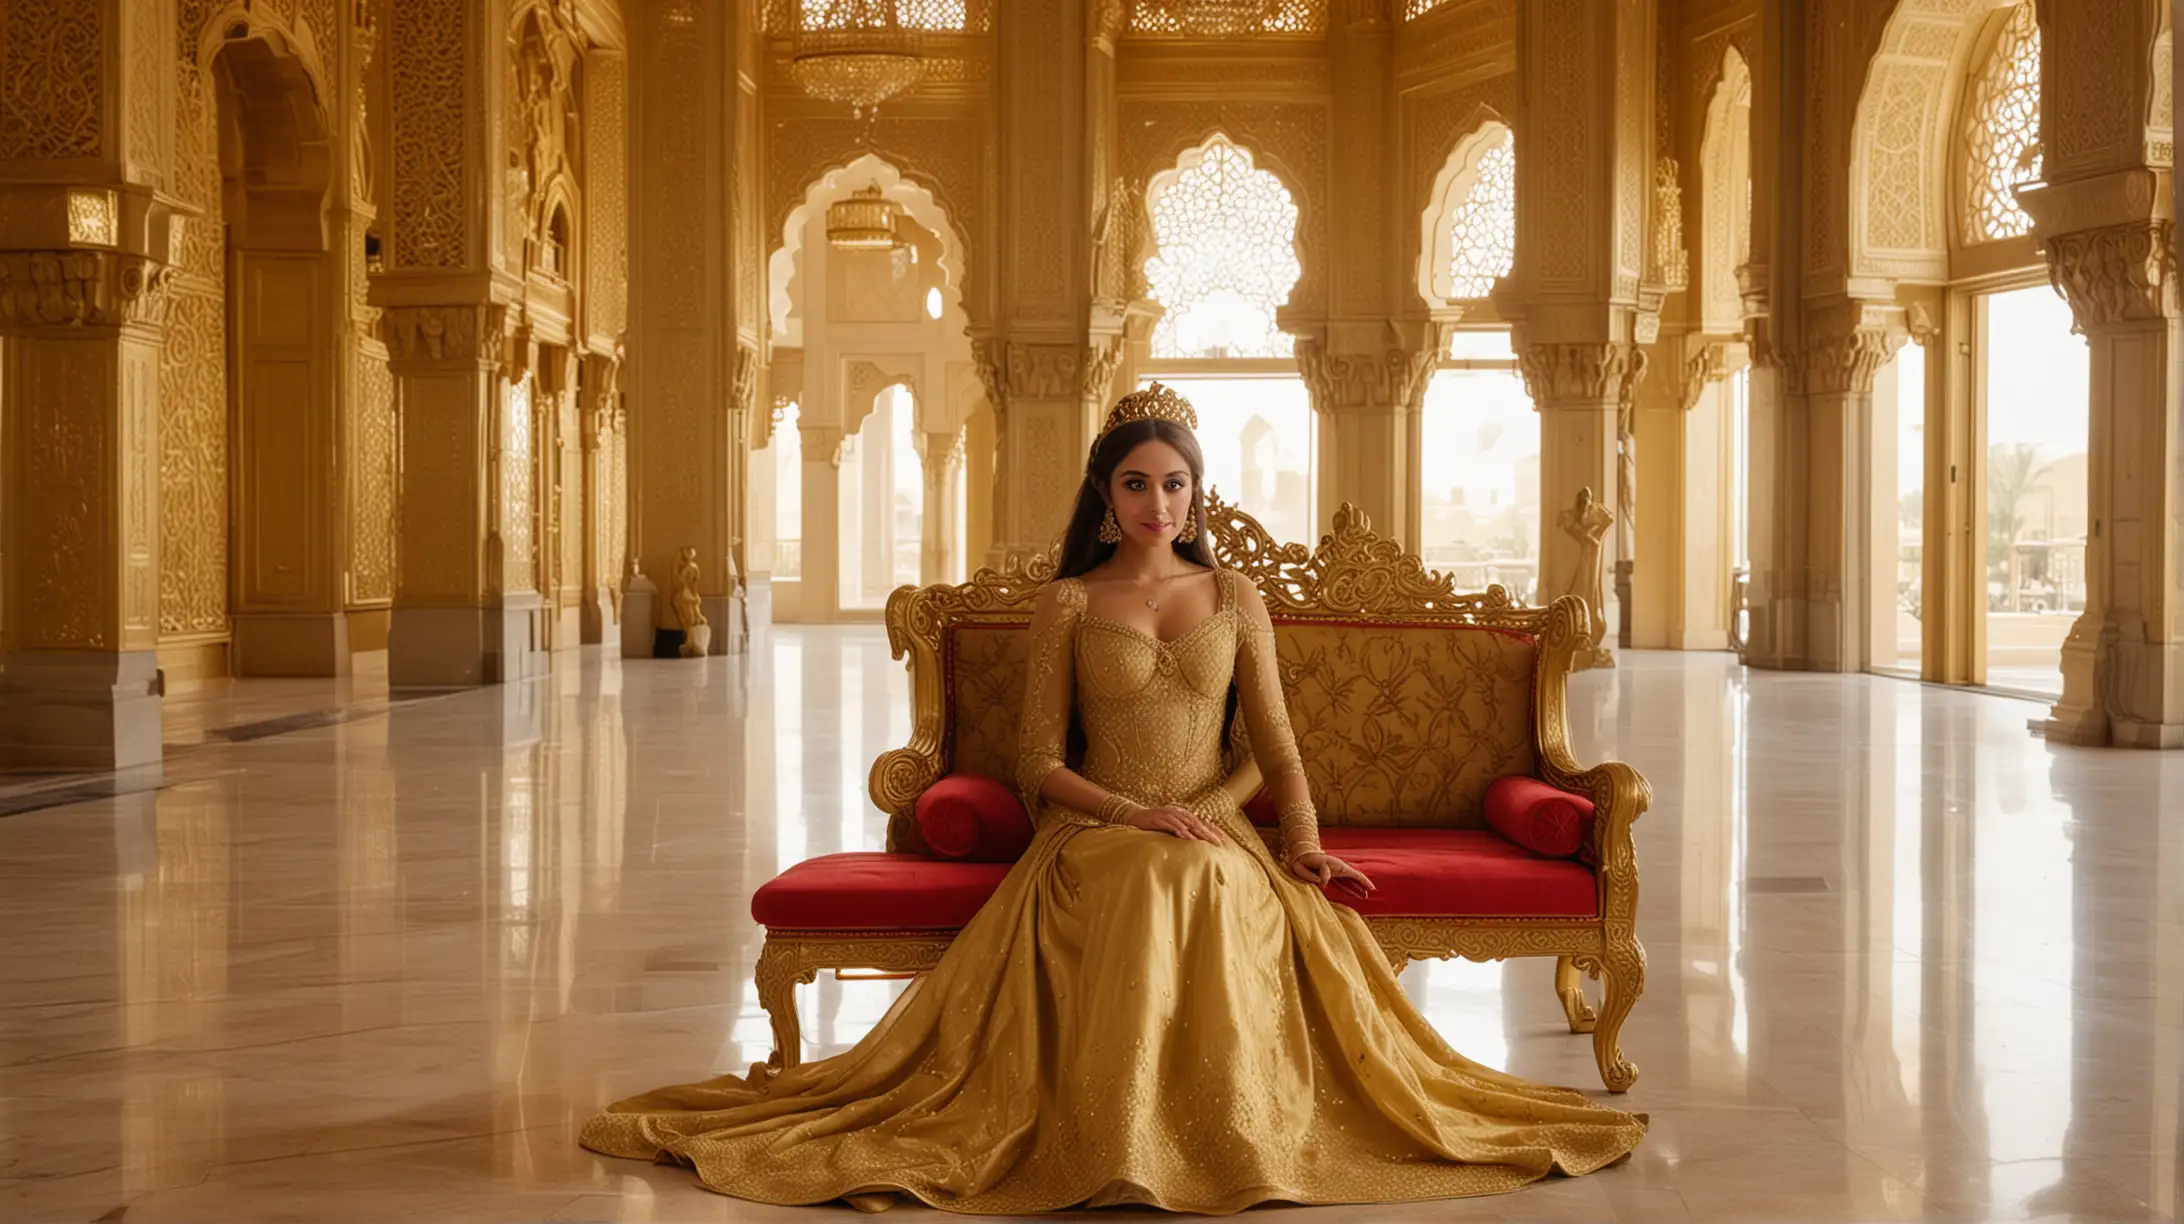 Dubai Princess Sitting inside Golden Palace